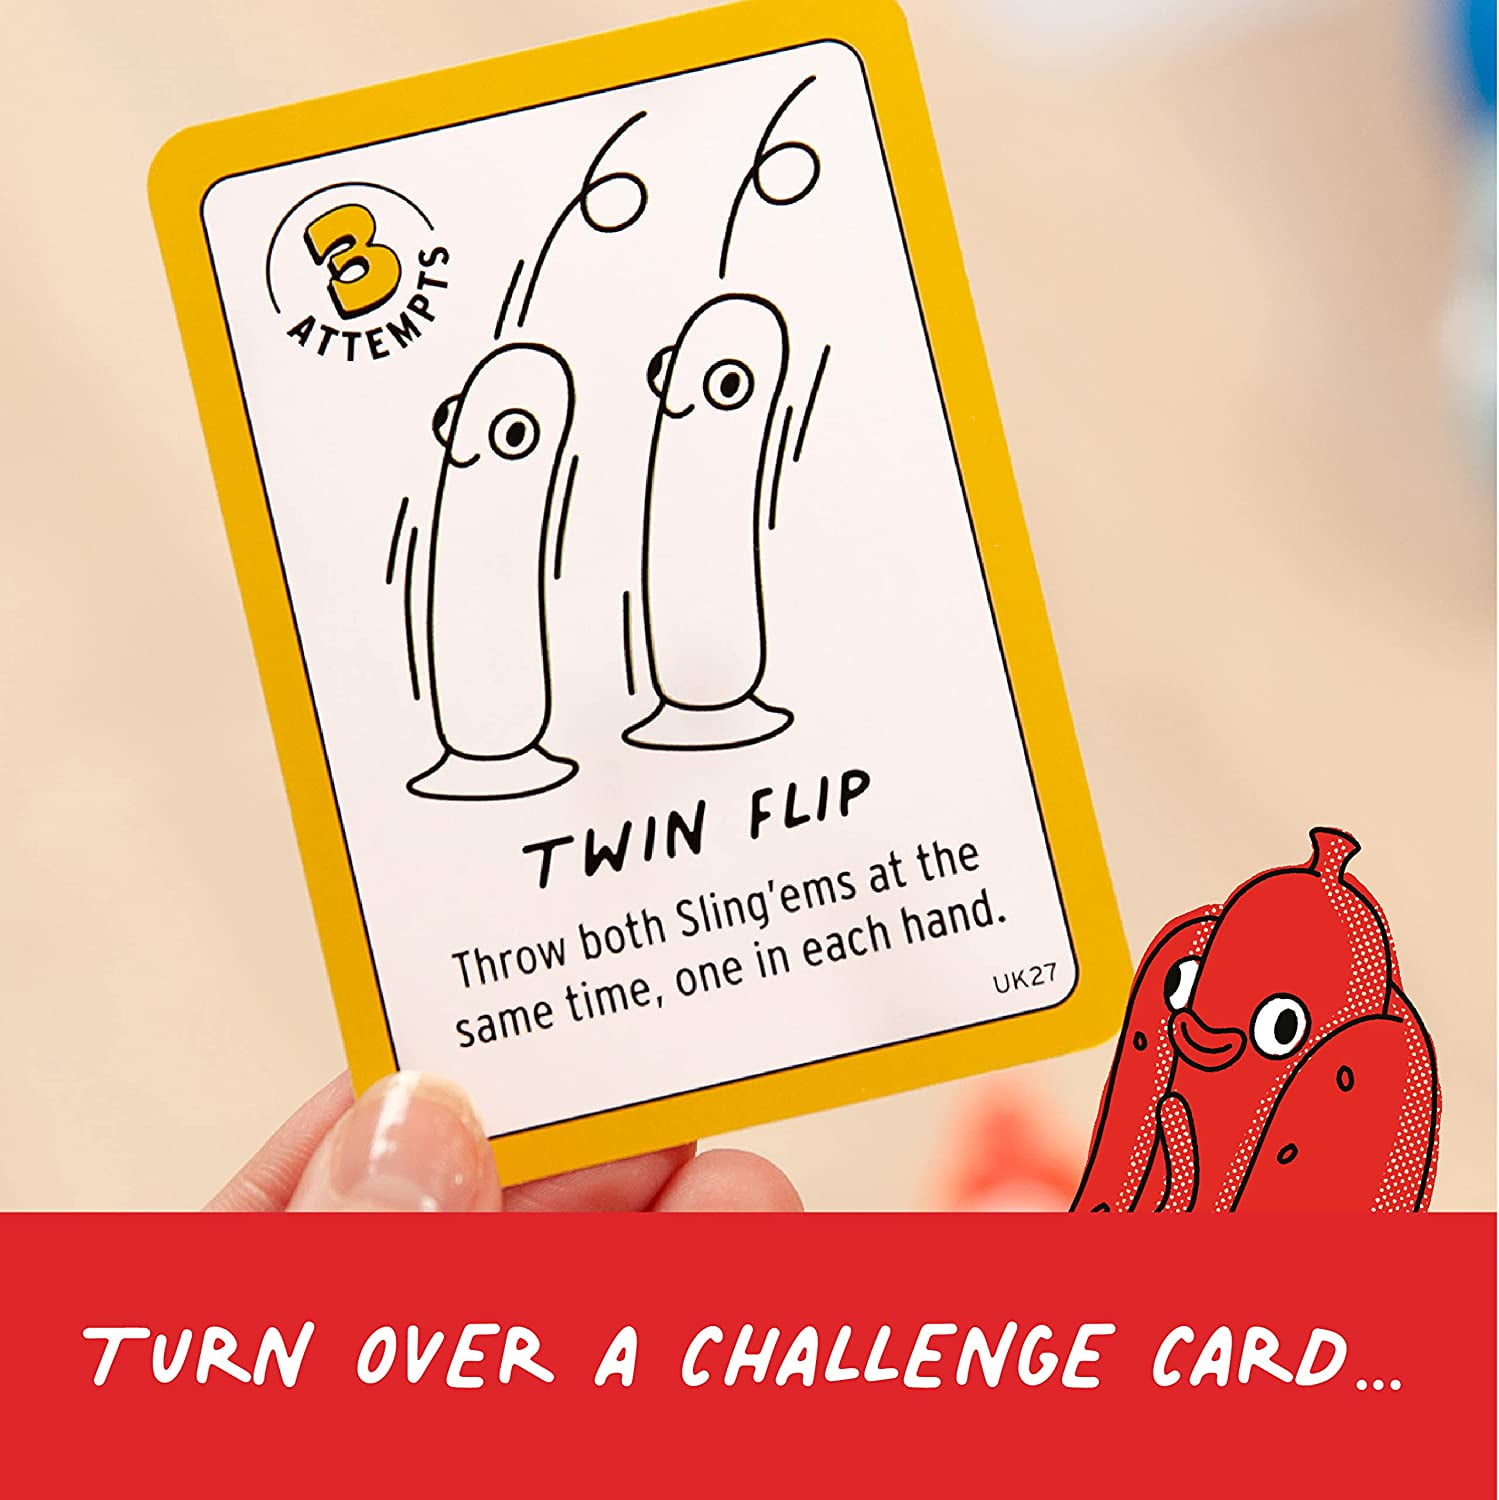 Chicken vs Hotdog, Board Game